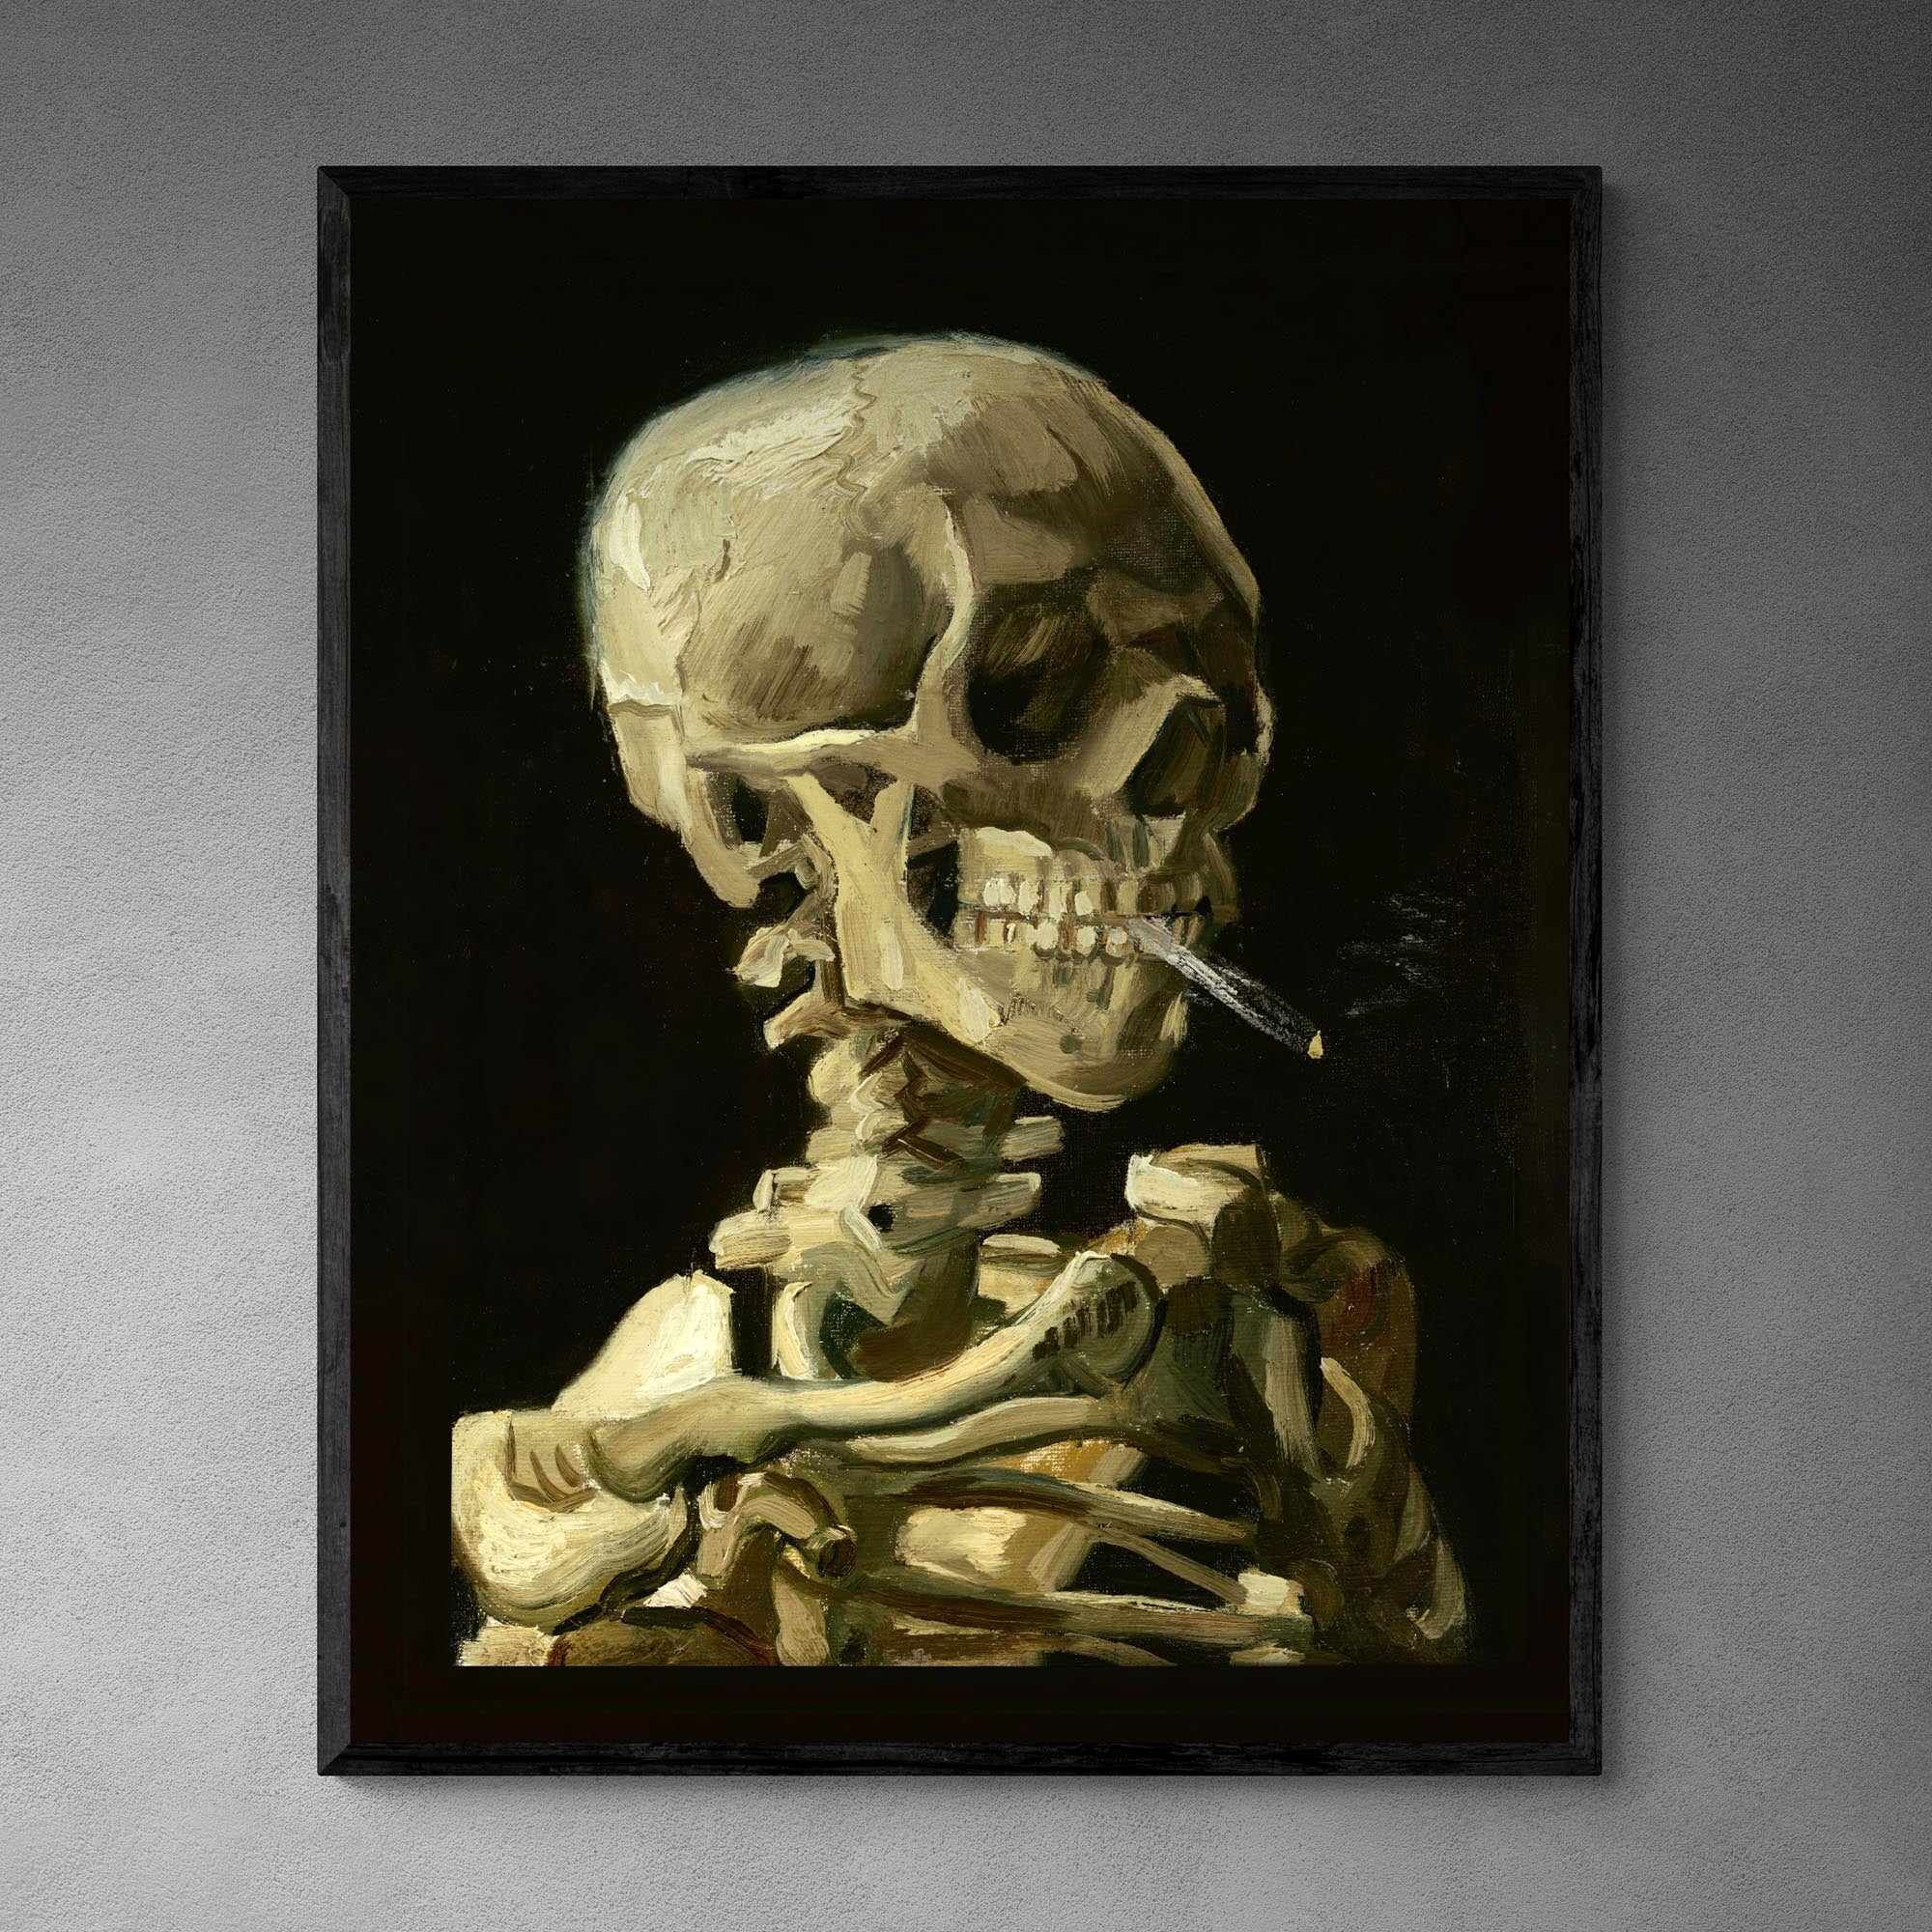 Framed Print 6"x8" / Black Frame Framed Spliff Skeleton Skull Smoking Cannabis Weed 420, Pot, Herb, Ganja, Marijuana, Stoner, Pothead Van Gogh Weed Framed Print